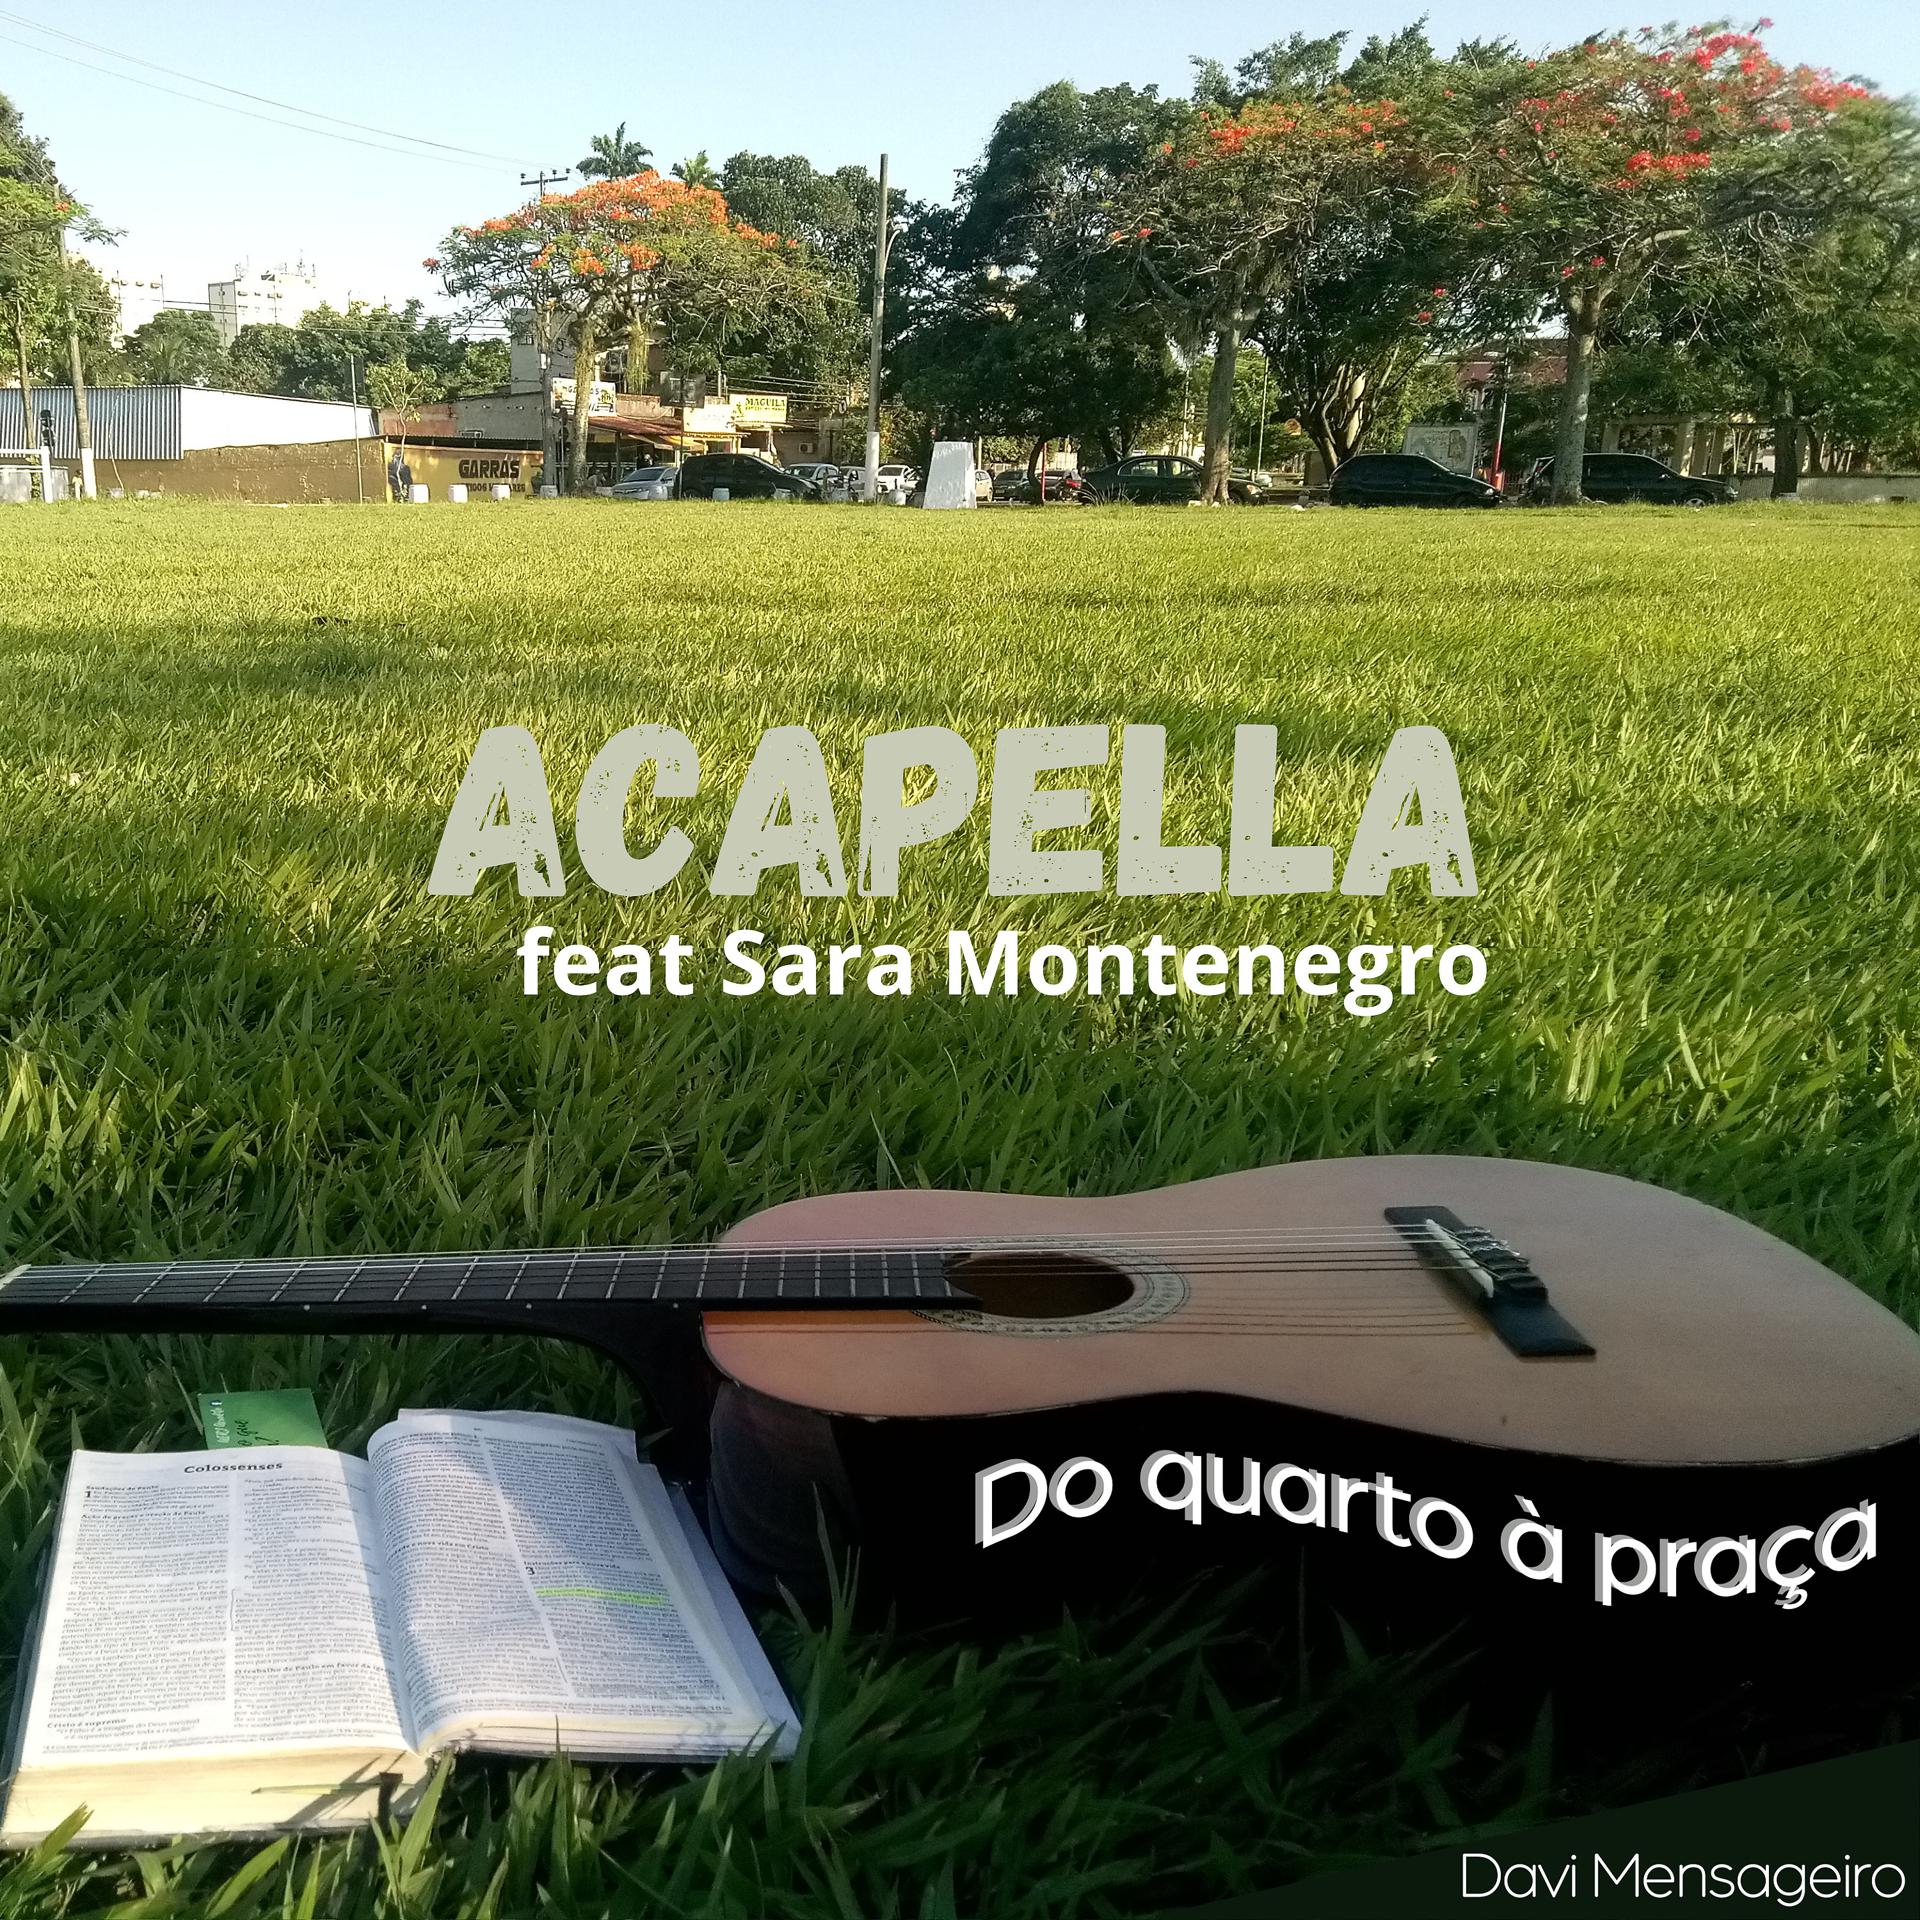 Постер альбома Acapella